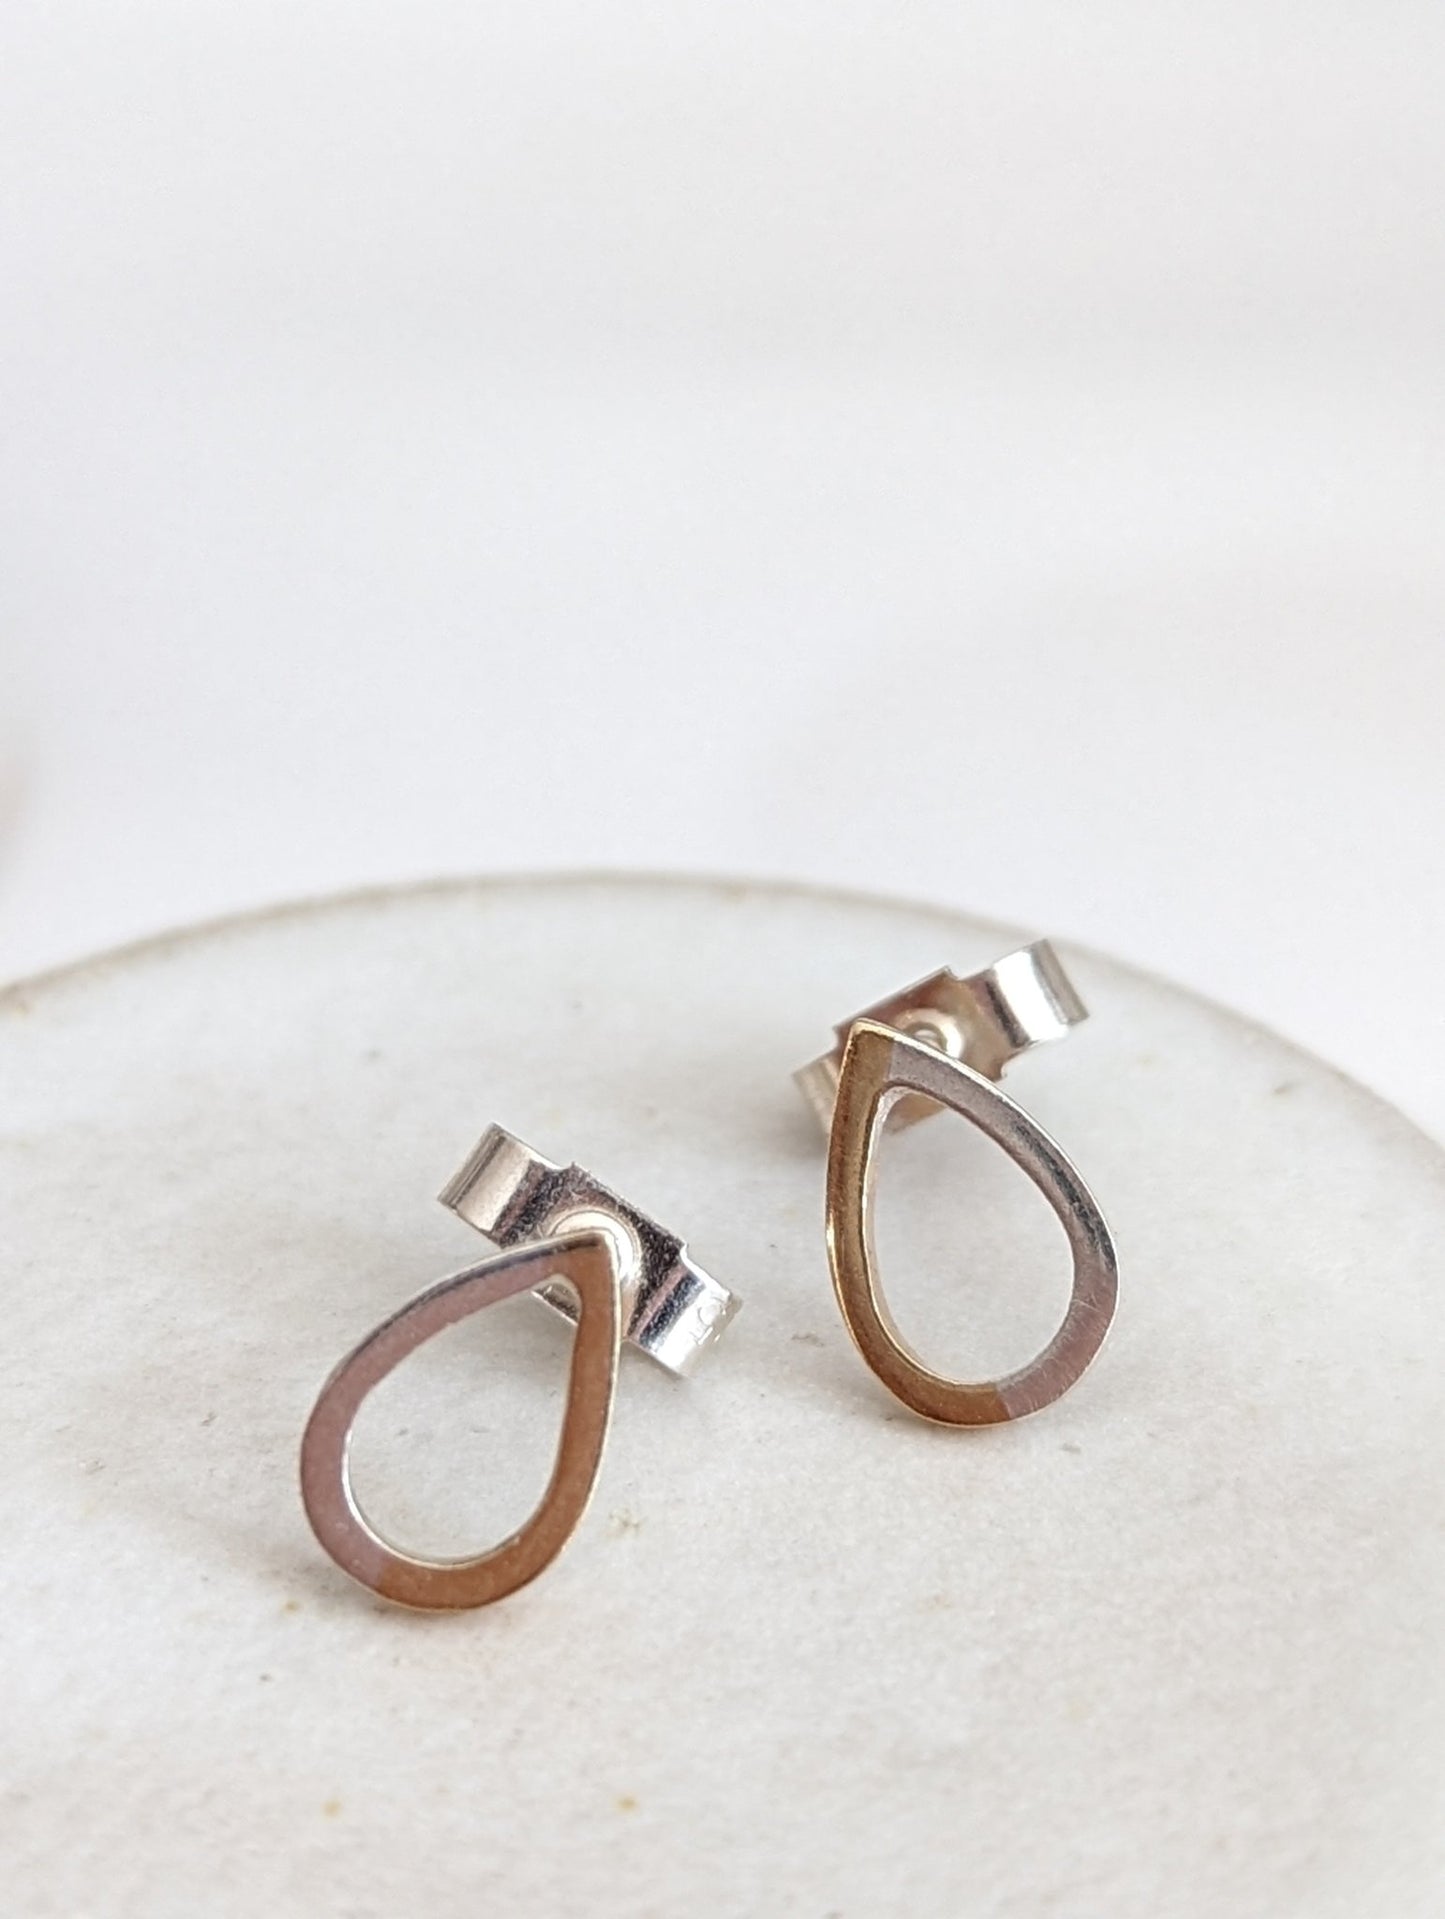 Glamorous Drops: Gold and Silver Teardrop Stud Earrings - Booblinka Jewellery